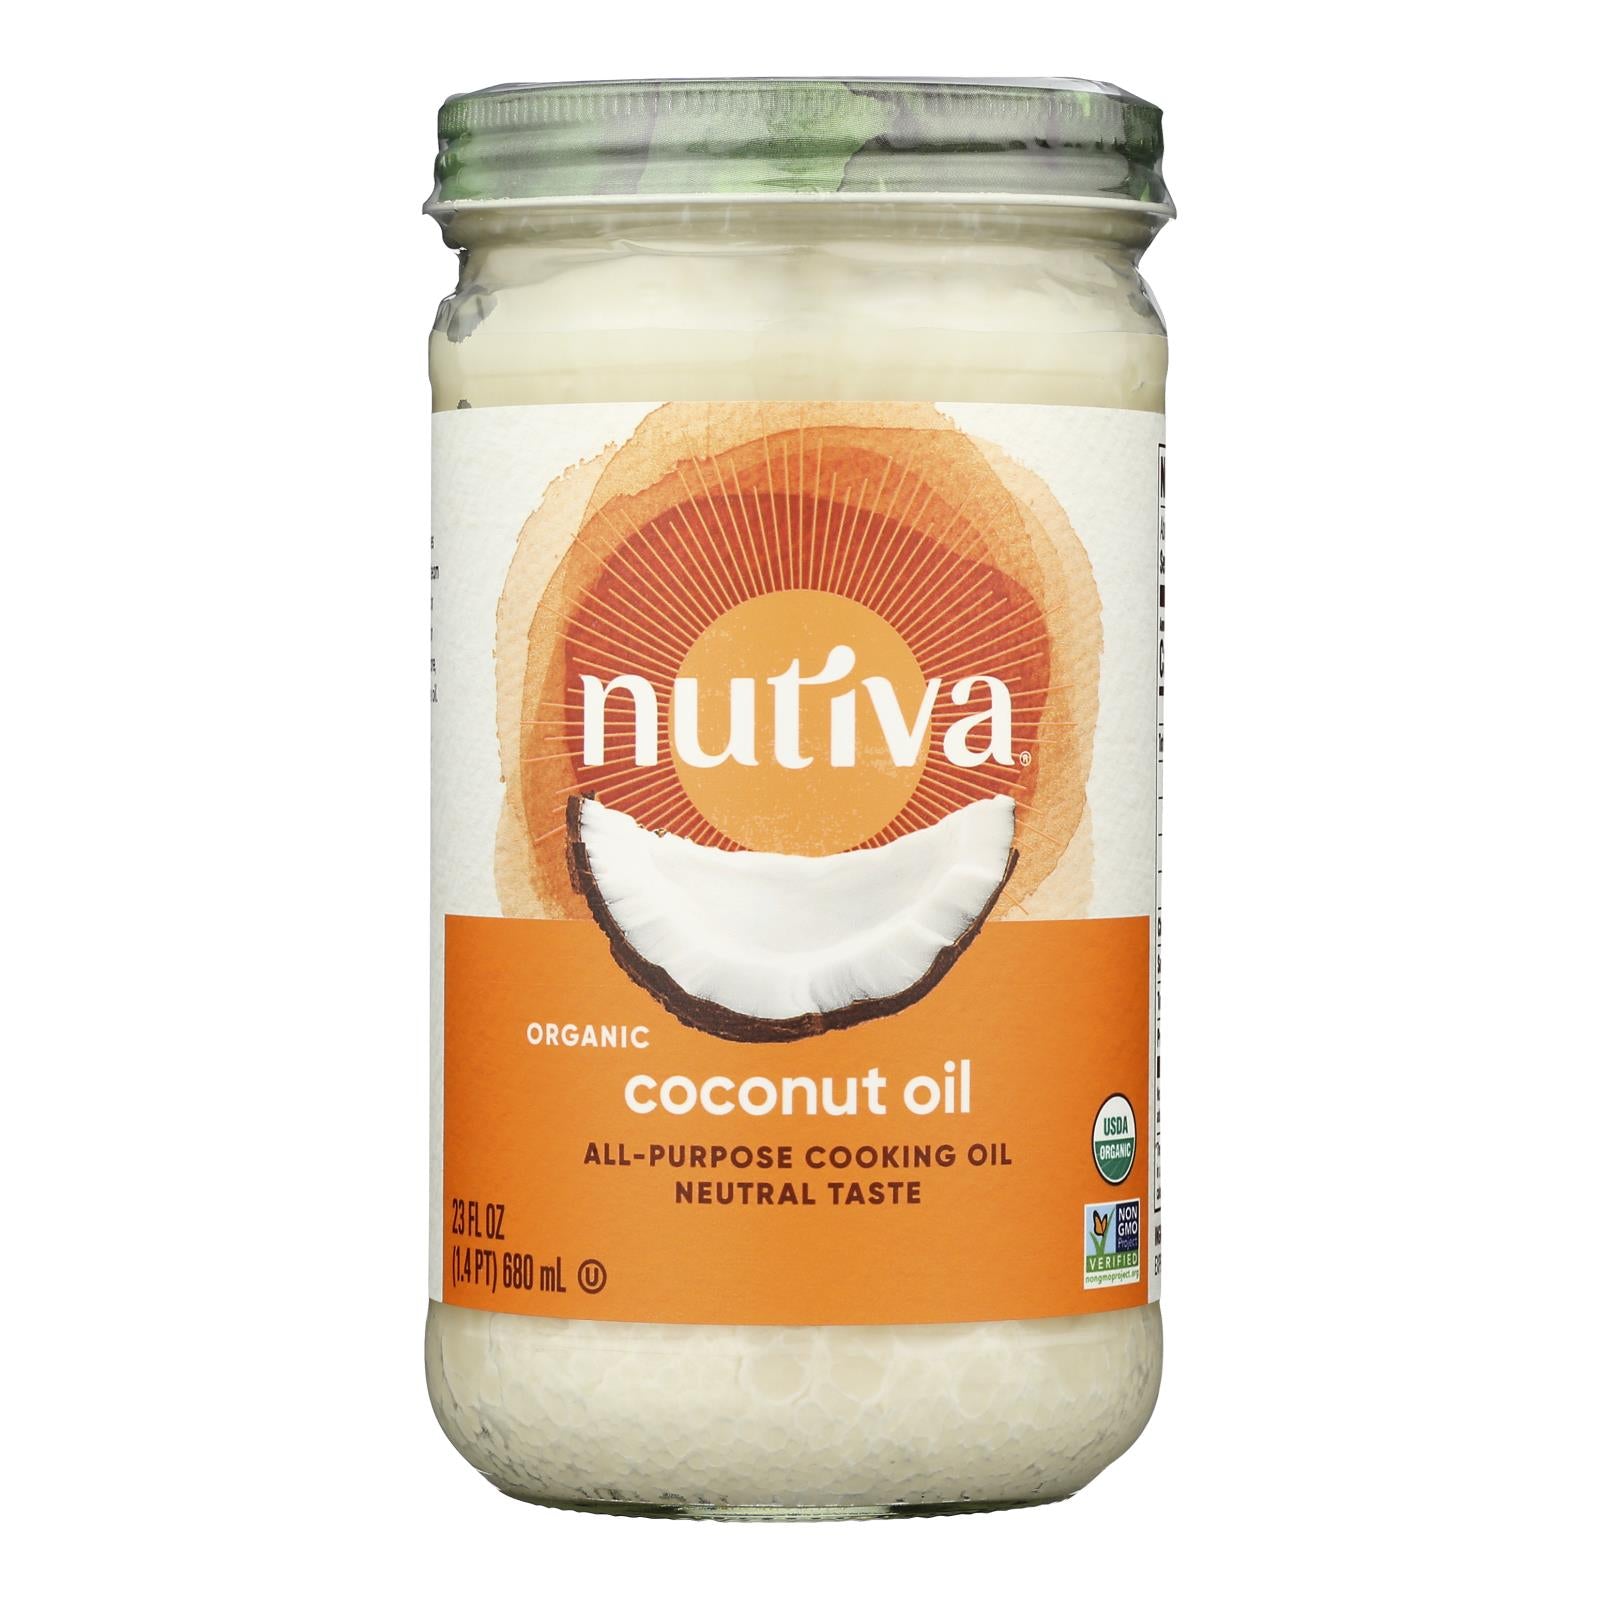 Nutiva Organic Coconut Oil - Refined - Case of 6 - 23 Fl oz.